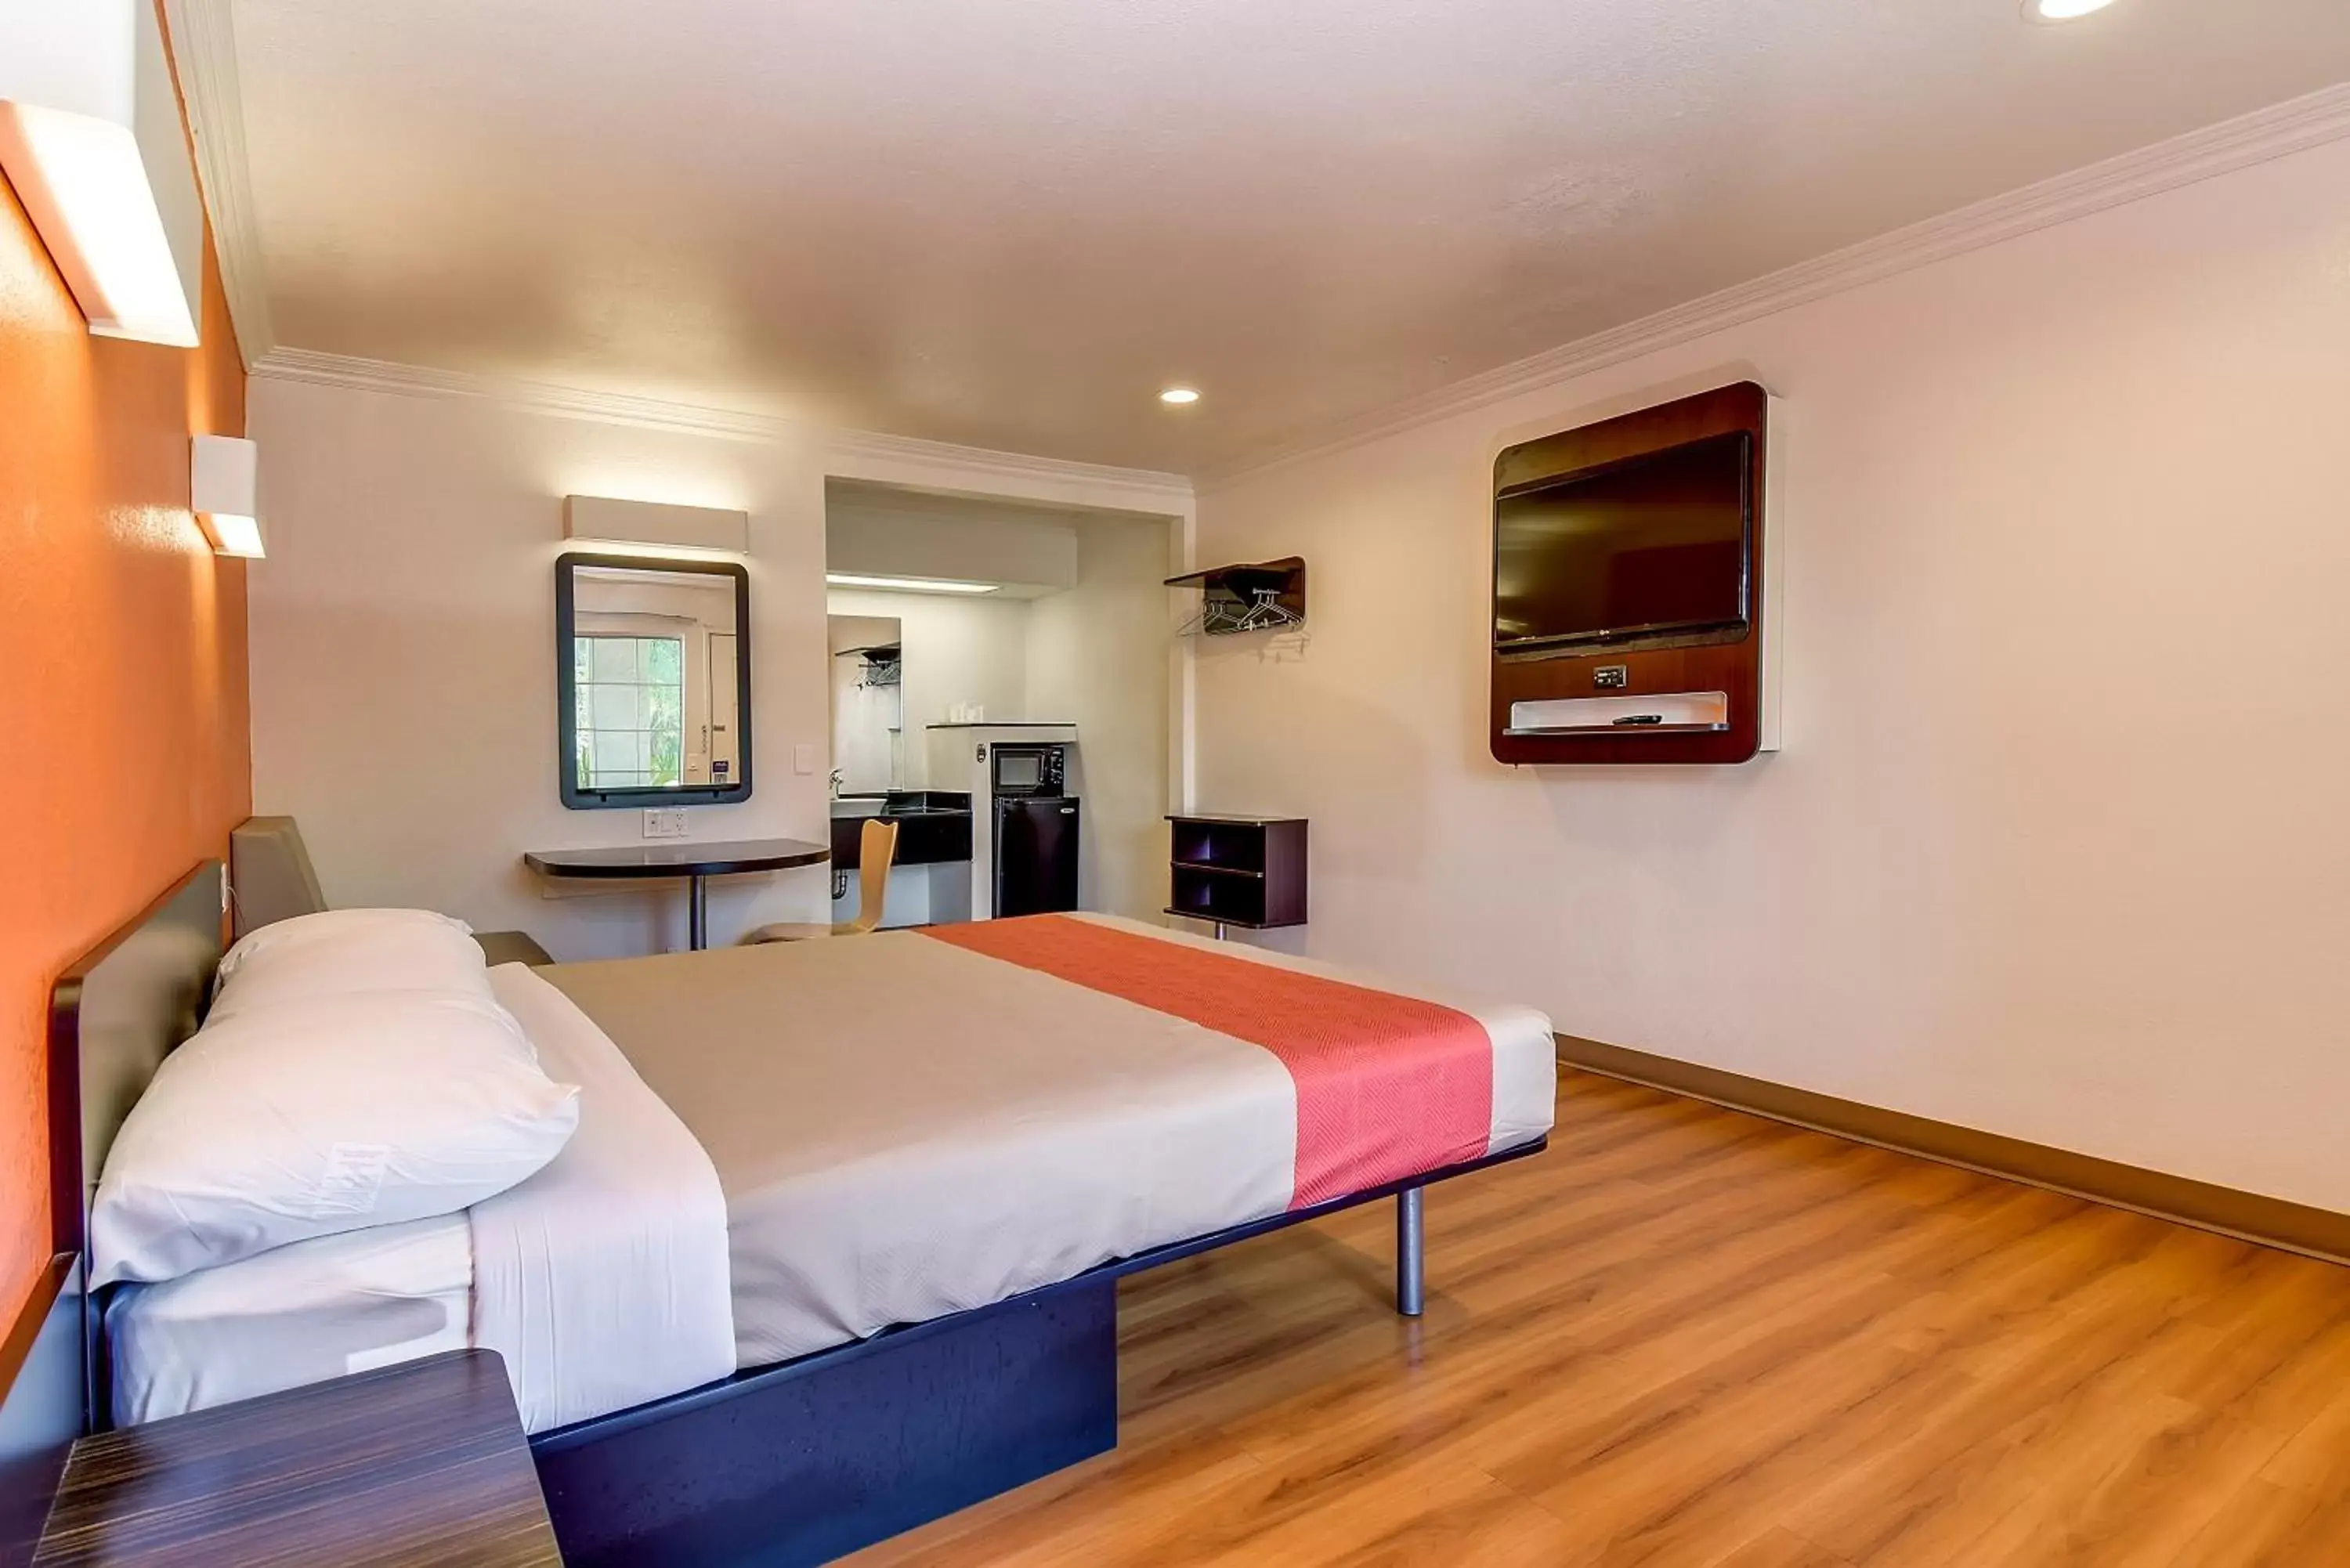 Bed, Room Photo in Motel 6 Garden Grove